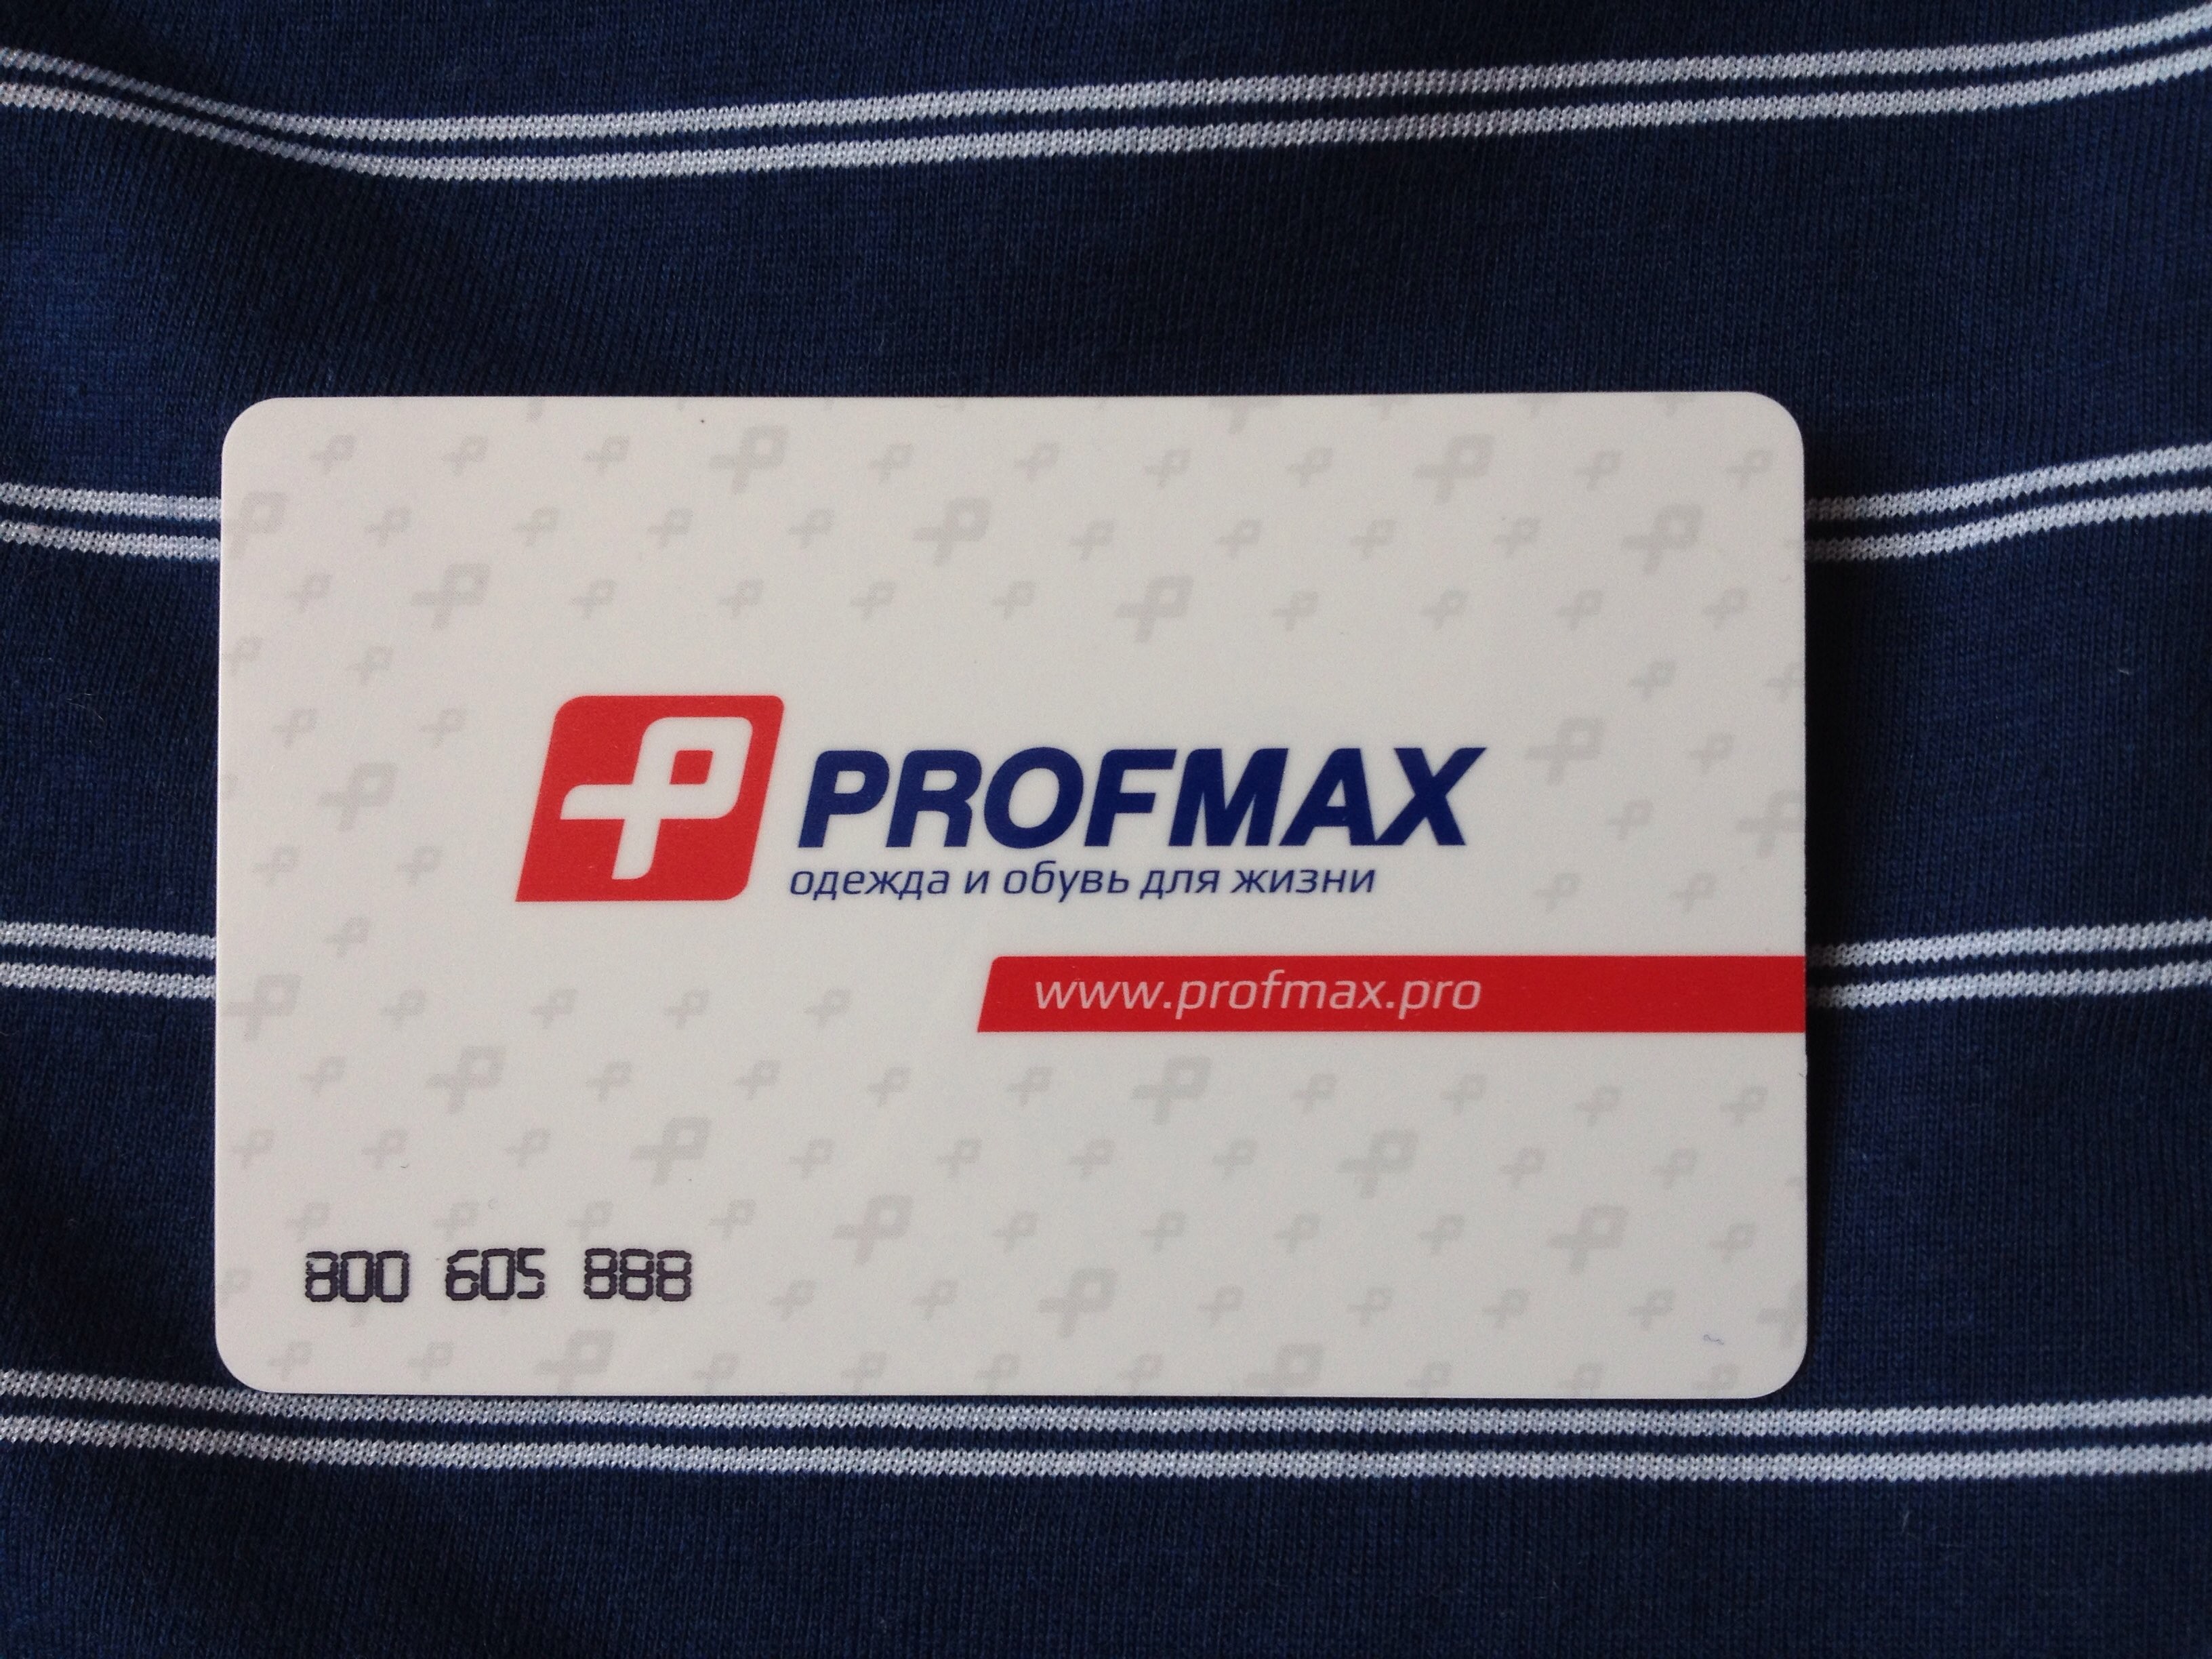 Профмакс тюмень сайт. Profmax. Profmax магазин. Profmax Челябинск. Профмакс логотип.